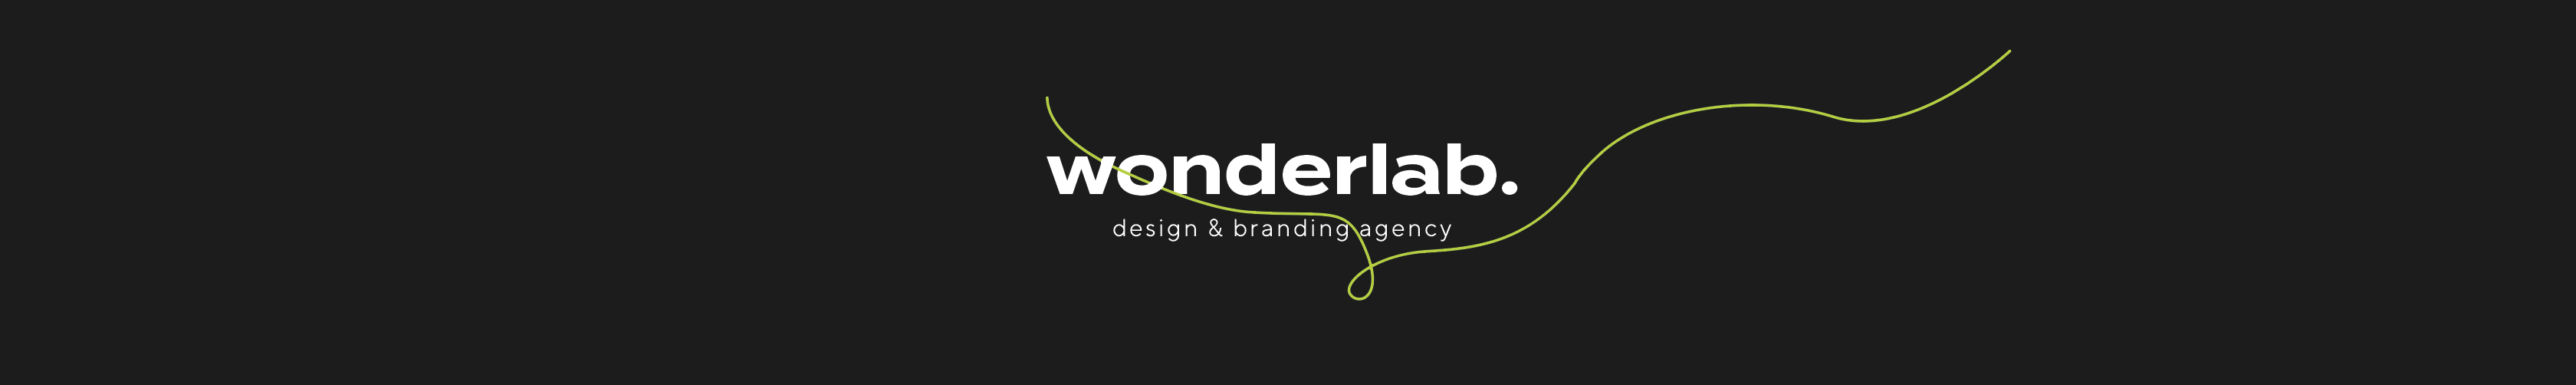 wonderlab agency's profile banner